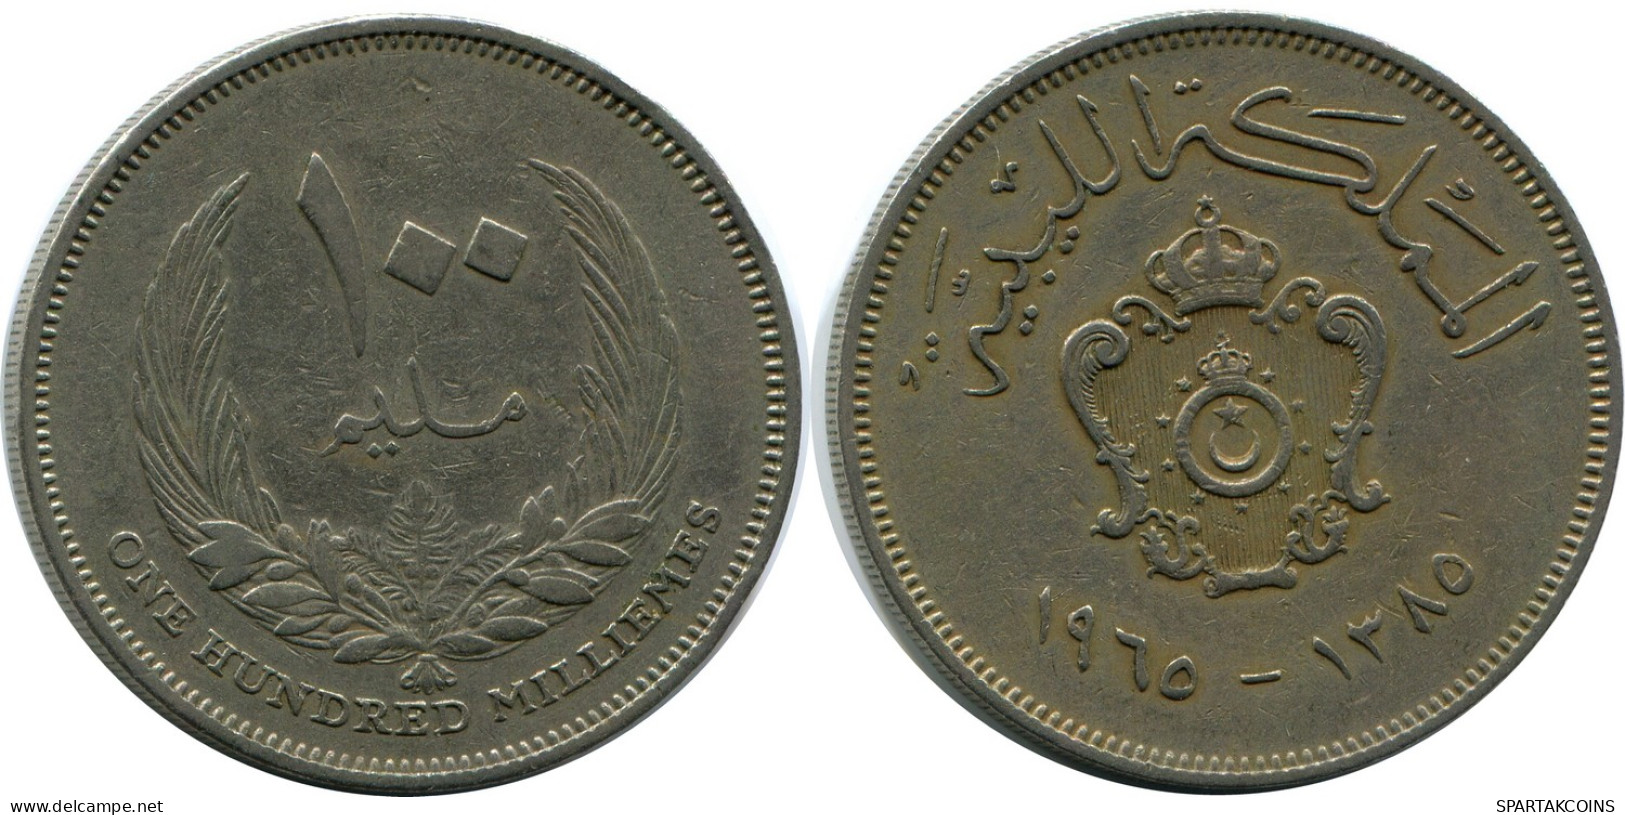 100 MILLIEMES 1960 LIBYA Coin #AR019.U - Libyen